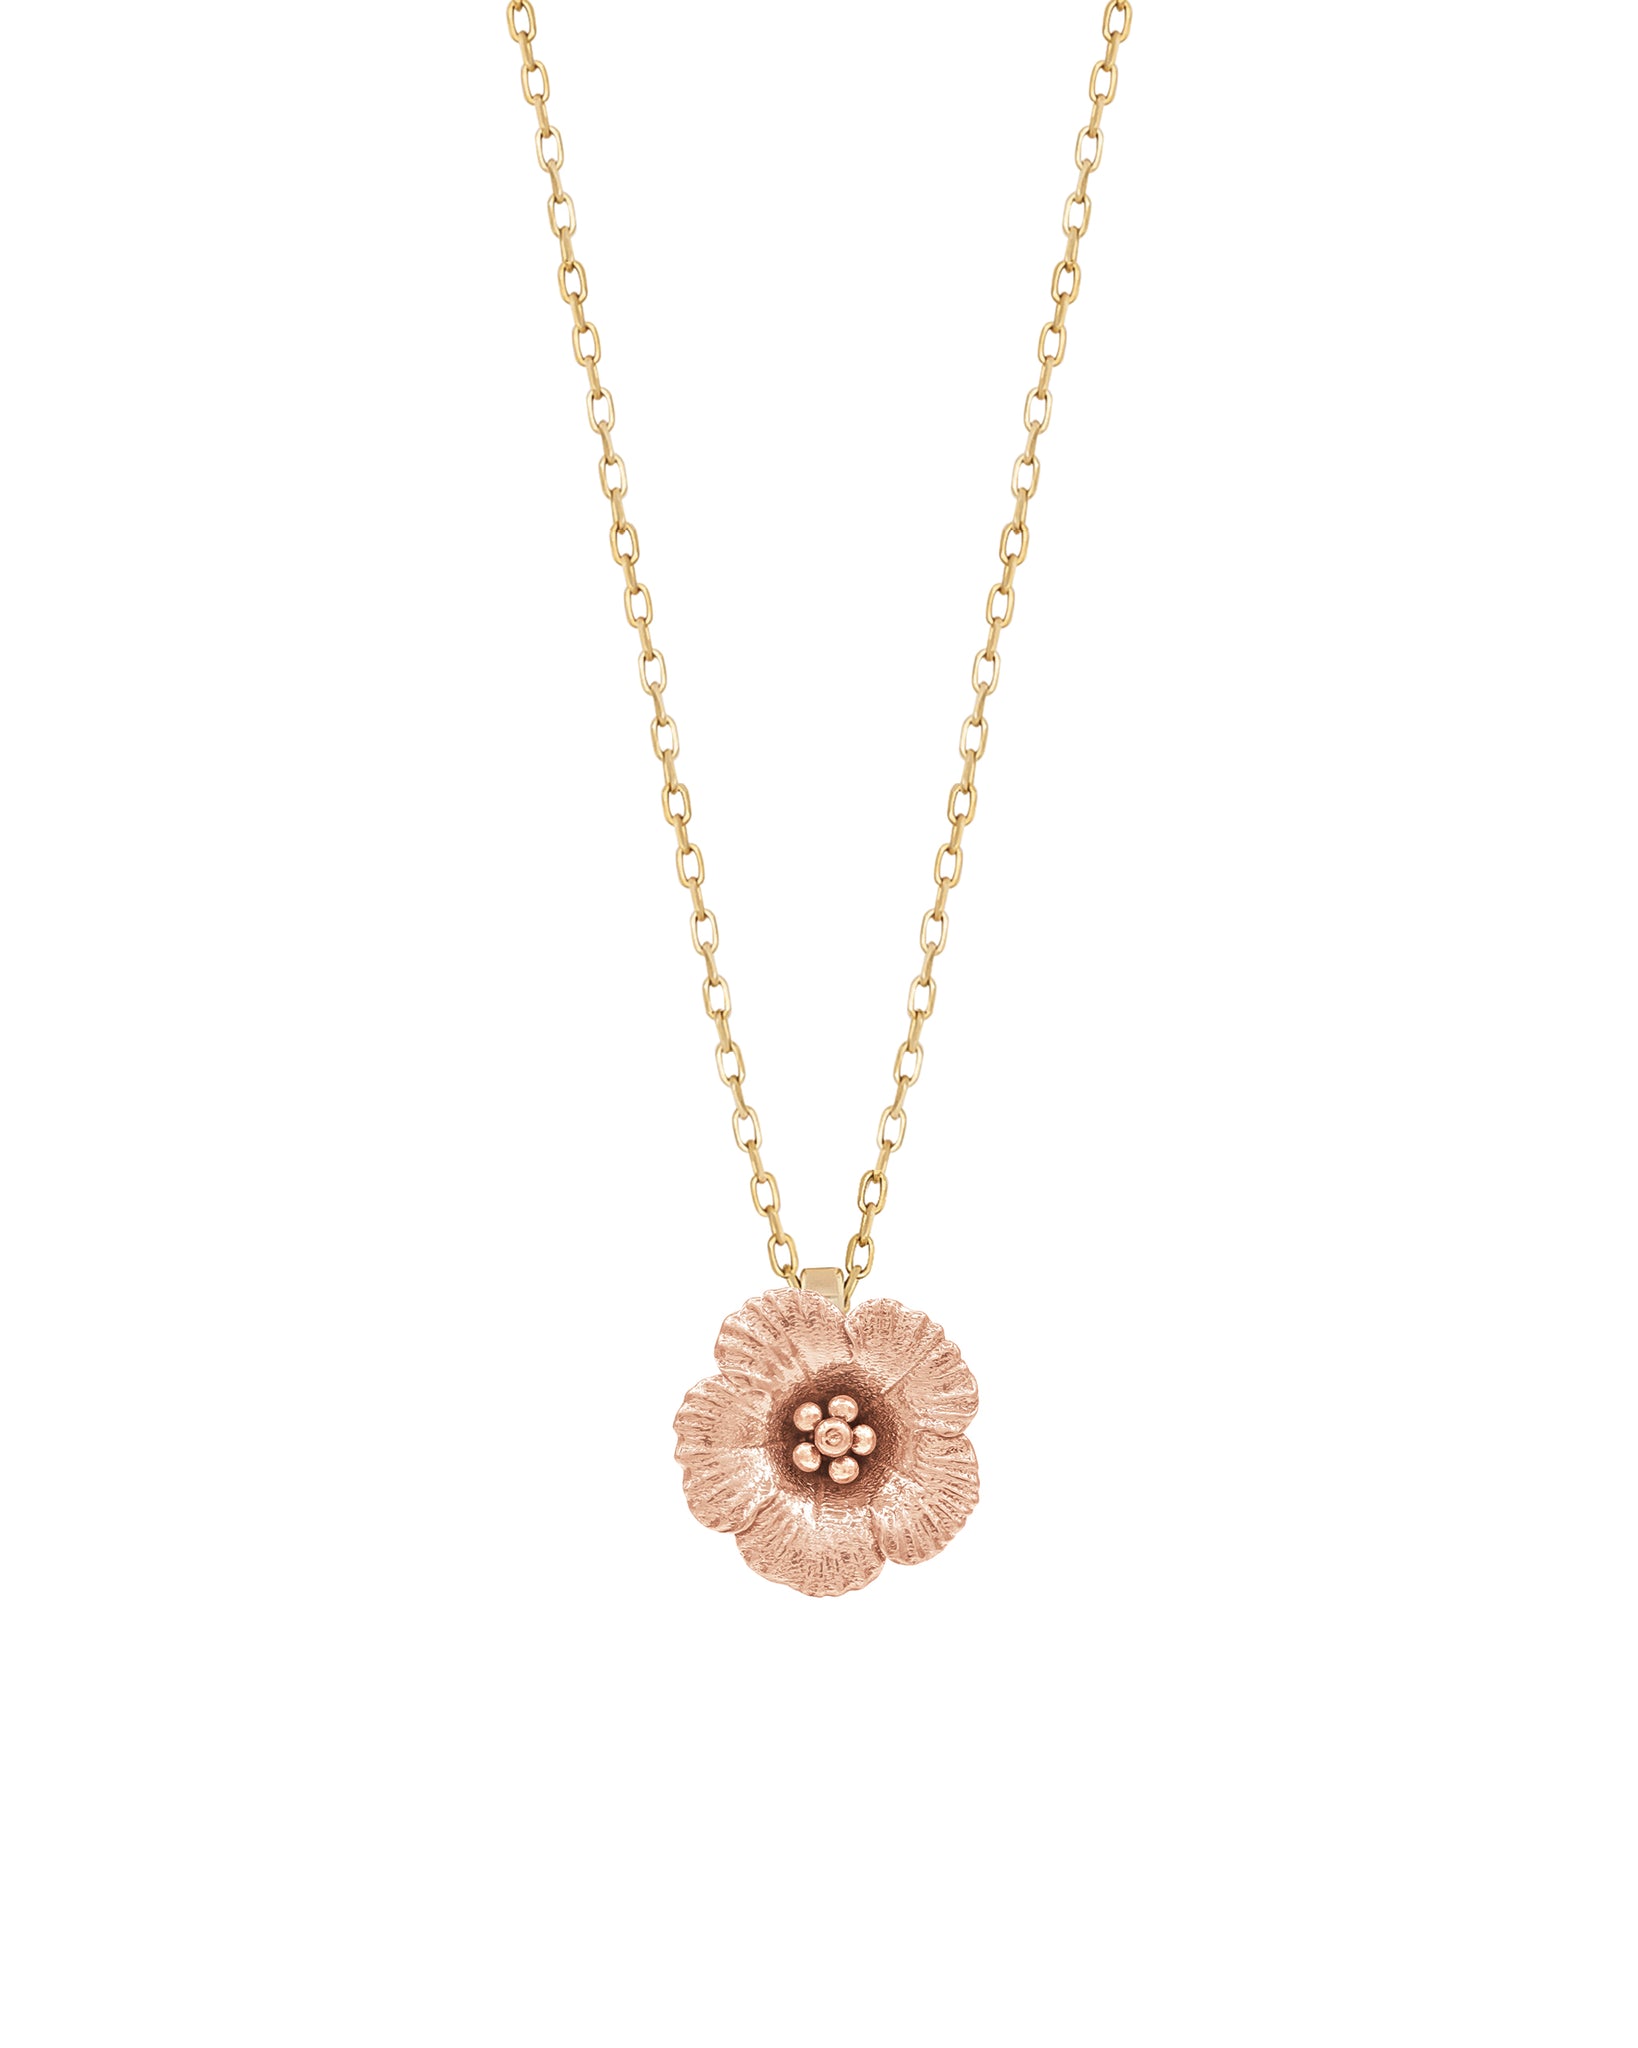 MAXI FLORA Petunia 14K Chain Necklace